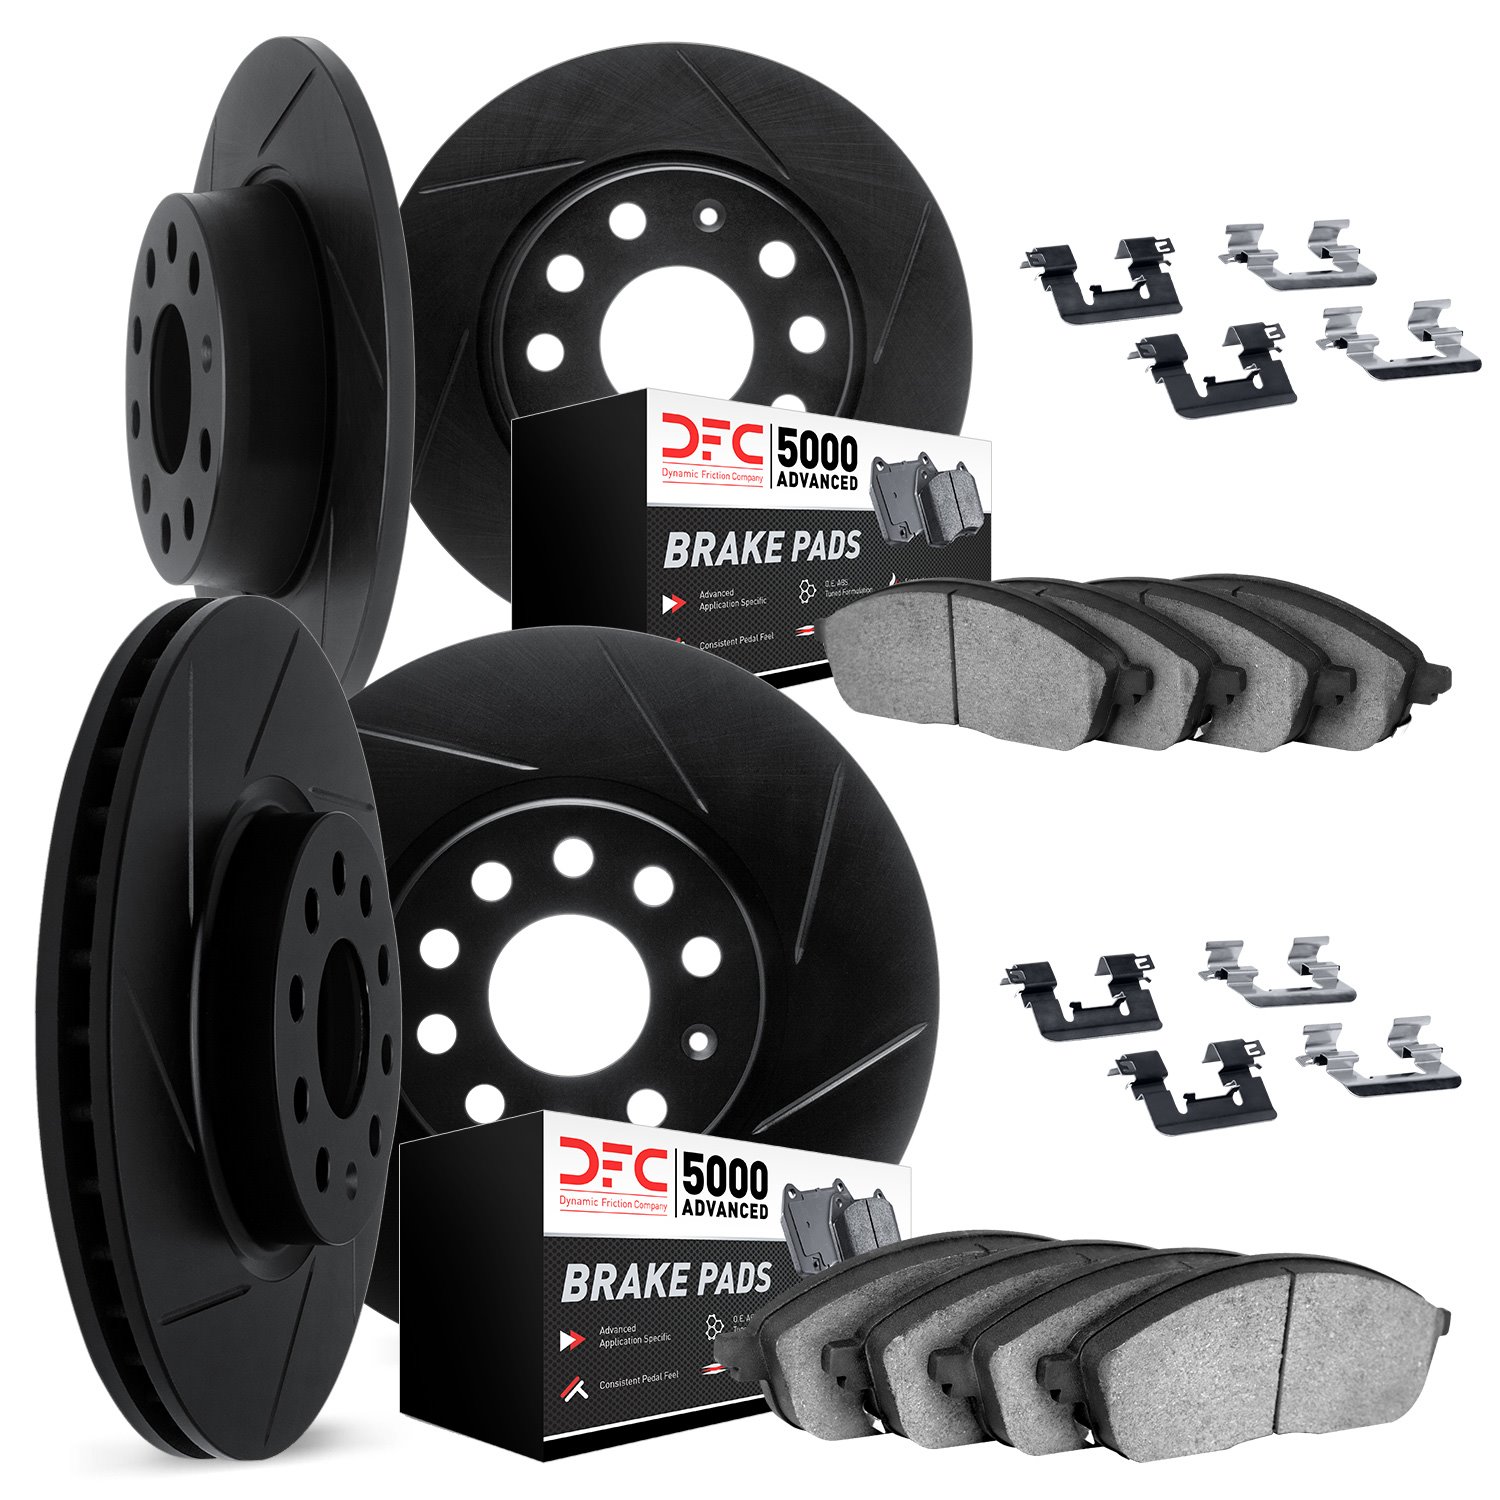 3514-54113 Slotted Brake Rotors w/5000 Advanced Brake Pads Kit & Hardware [Black], 2013-2018 Ford/Lincoln/Mercury/Mazda, Positio